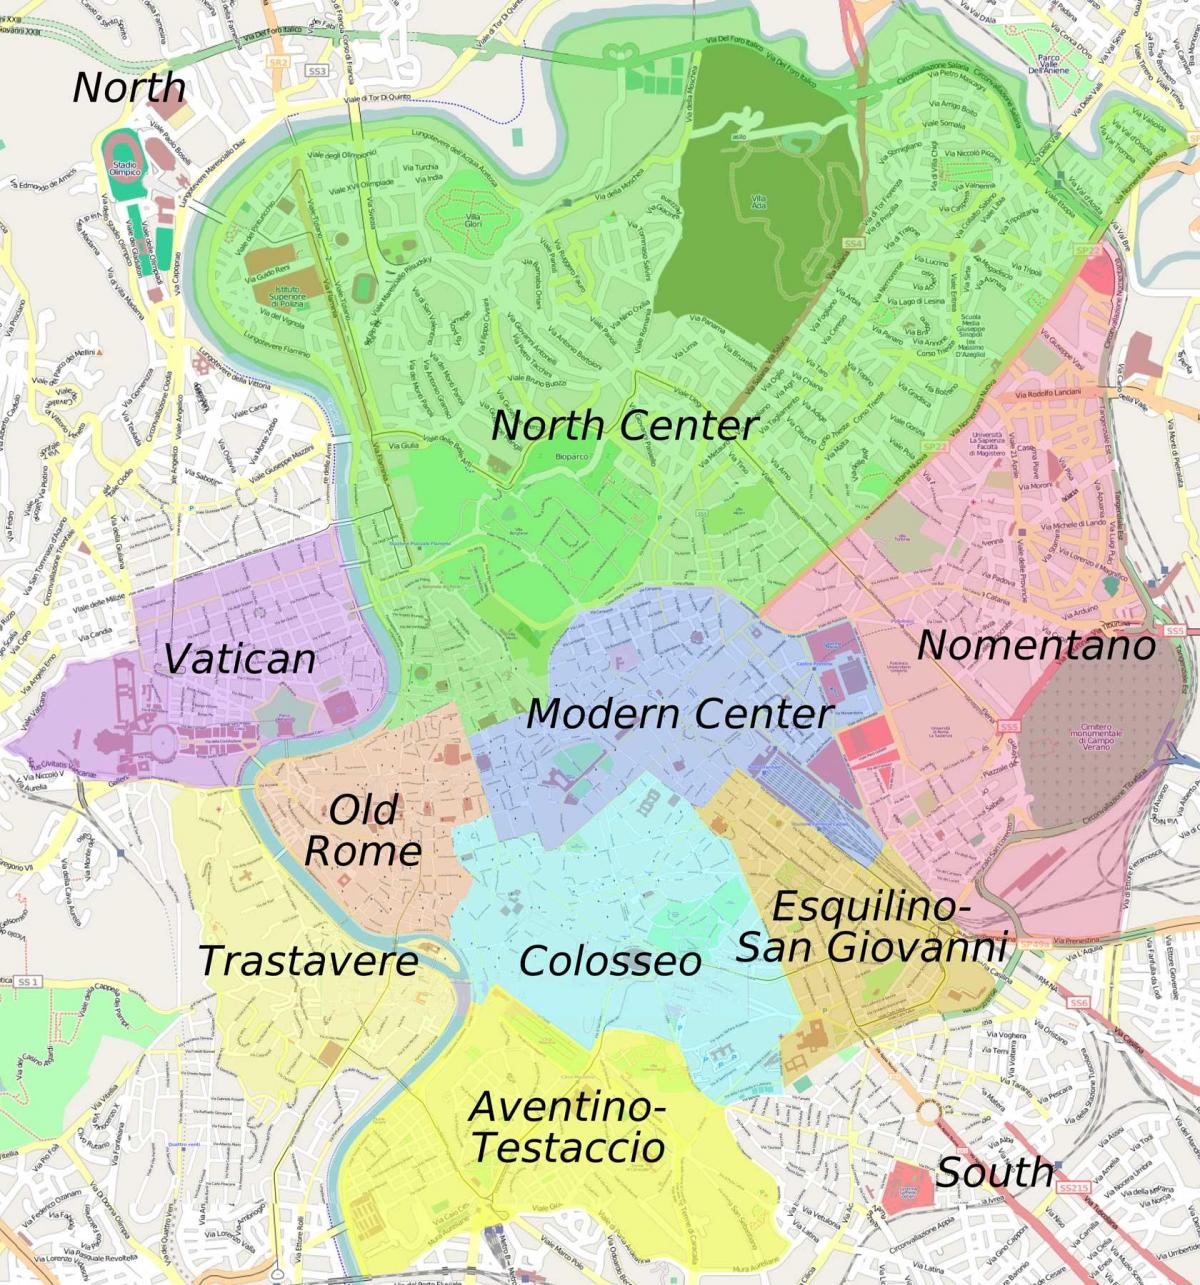 mapa do Romano bairros